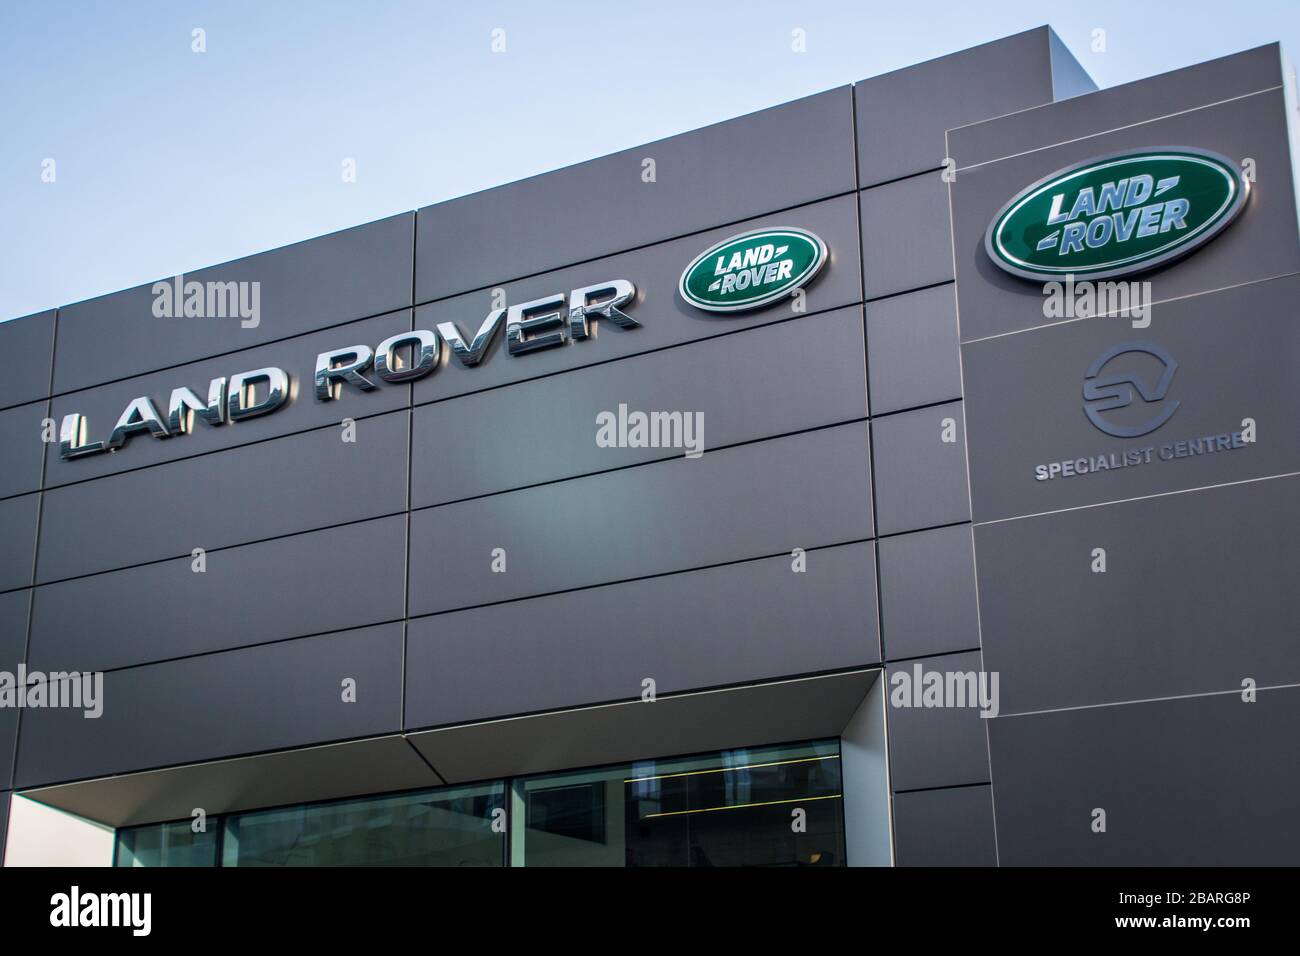 Land Rover car showroom- a British multinational automotive company. Stock Photo